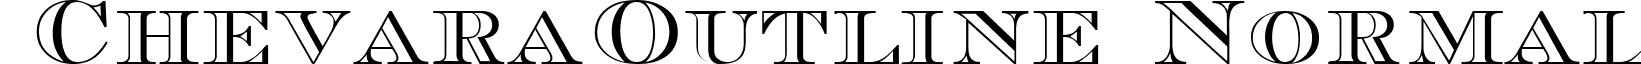 ChevaraOutline Normal font - ChevaraOutlineNormal.ttf